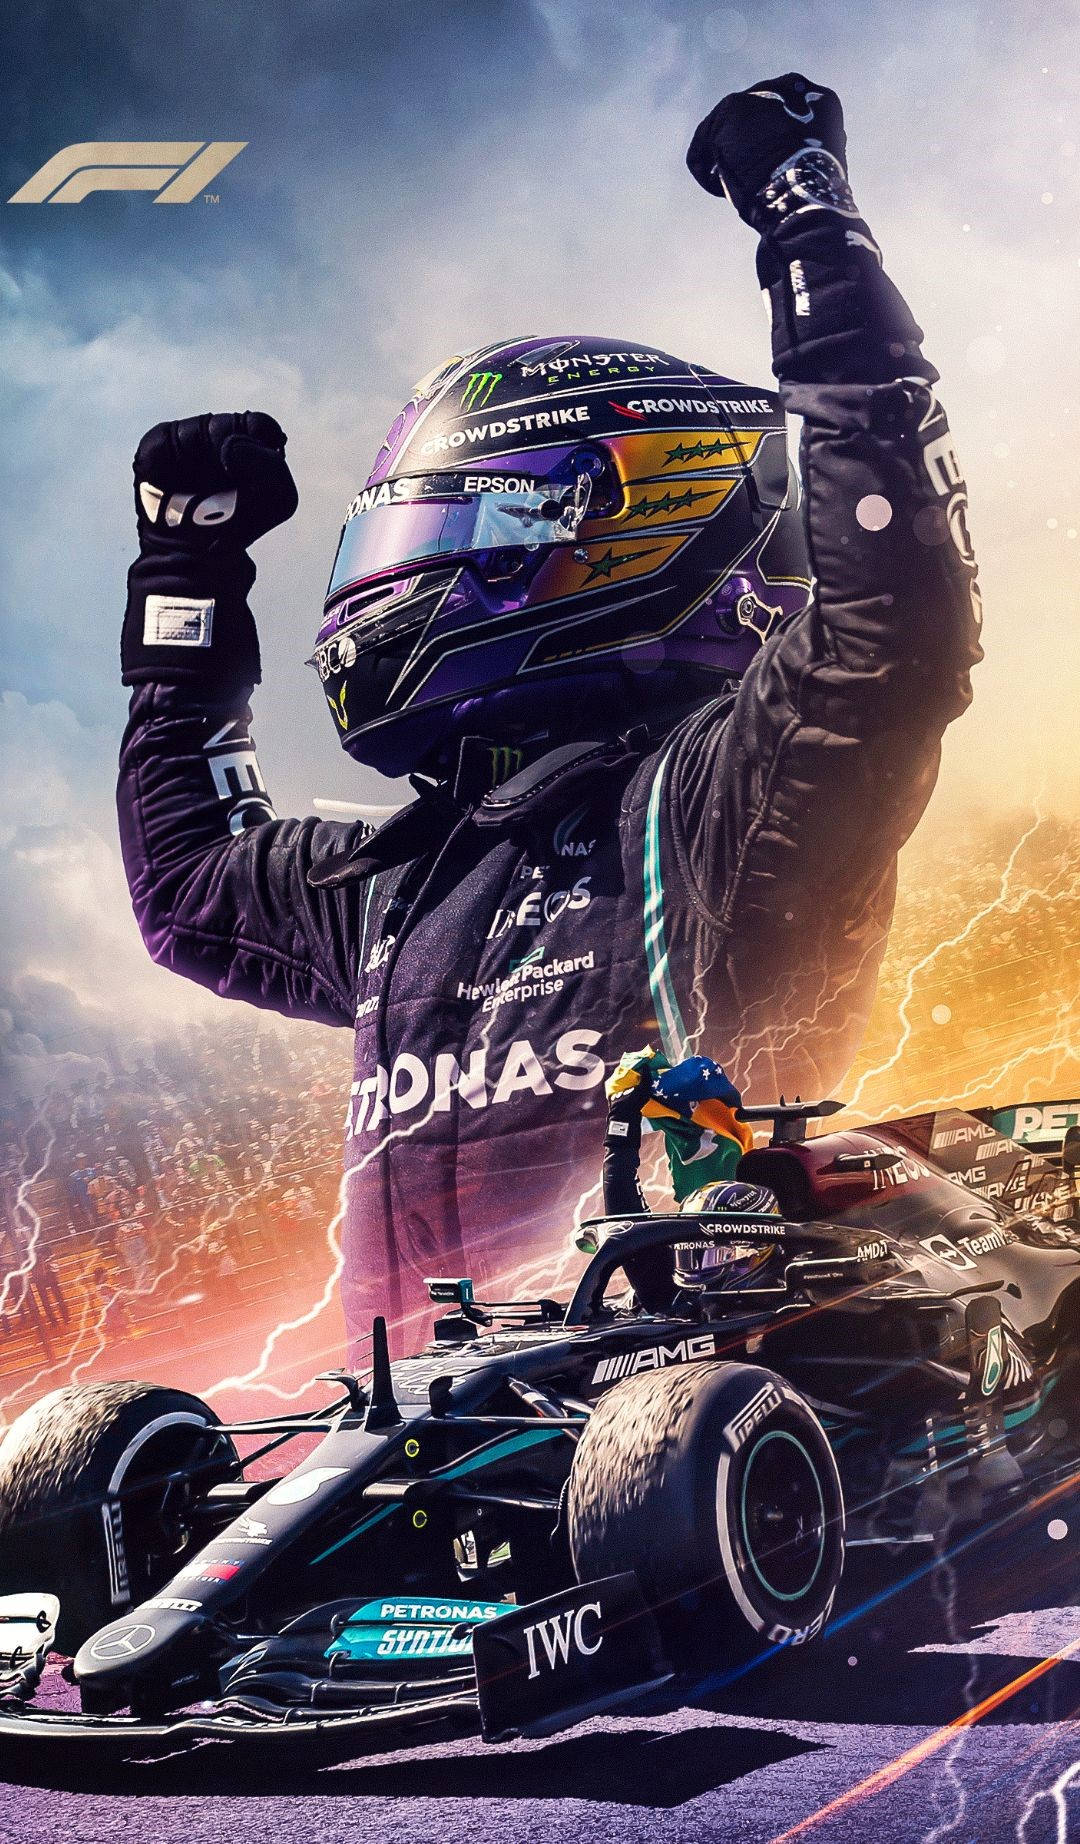 F1 Champion Lewis Hamilton Driving the Mercedes Wallpaper